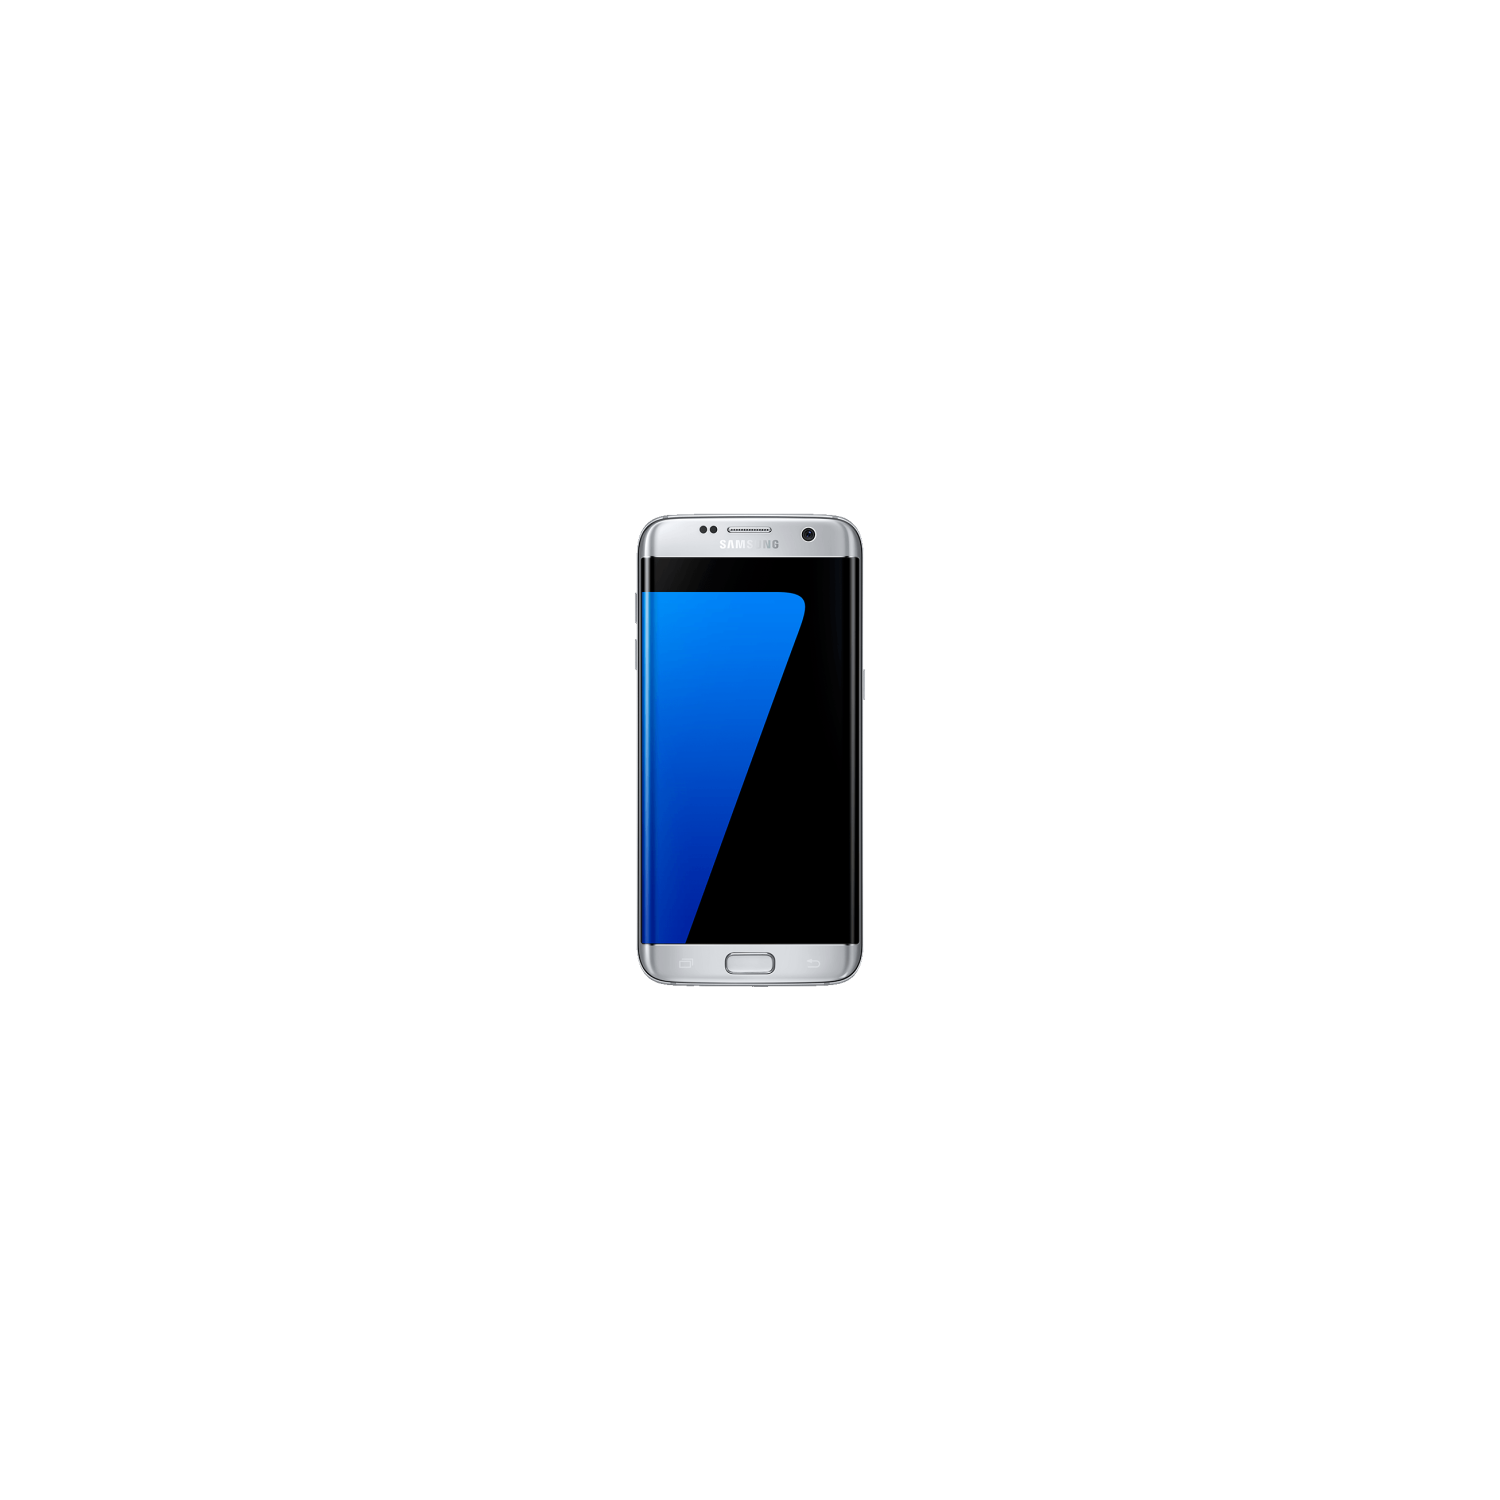 Samsung Galaxy S7 edge 32GB Smartphone - Silver Titanium - Unlocked - Open Box